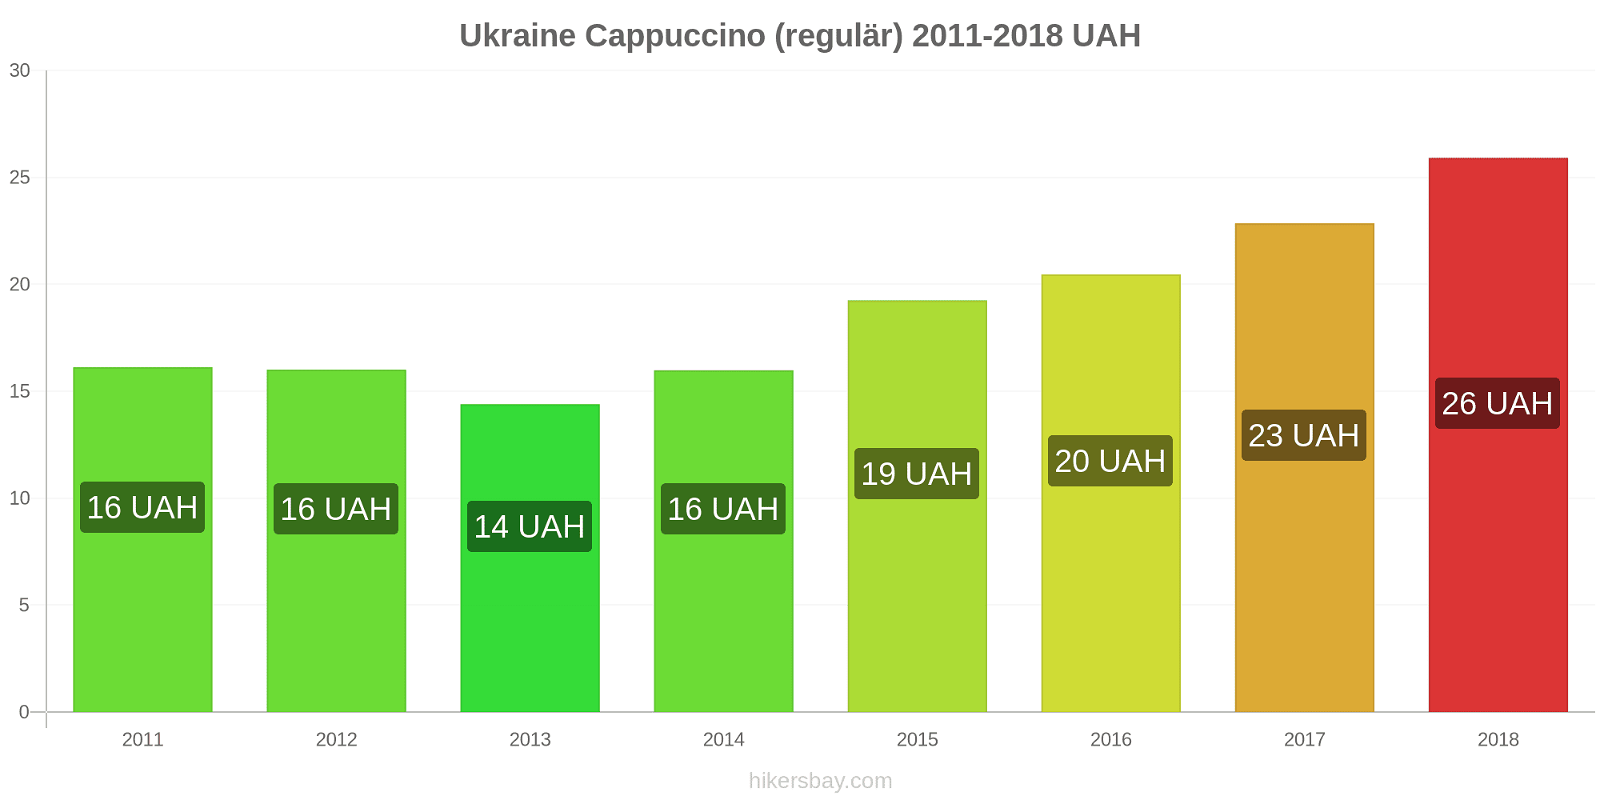 Ukraine Preisänderungen Cappuccino (regulär) hikersbay.com